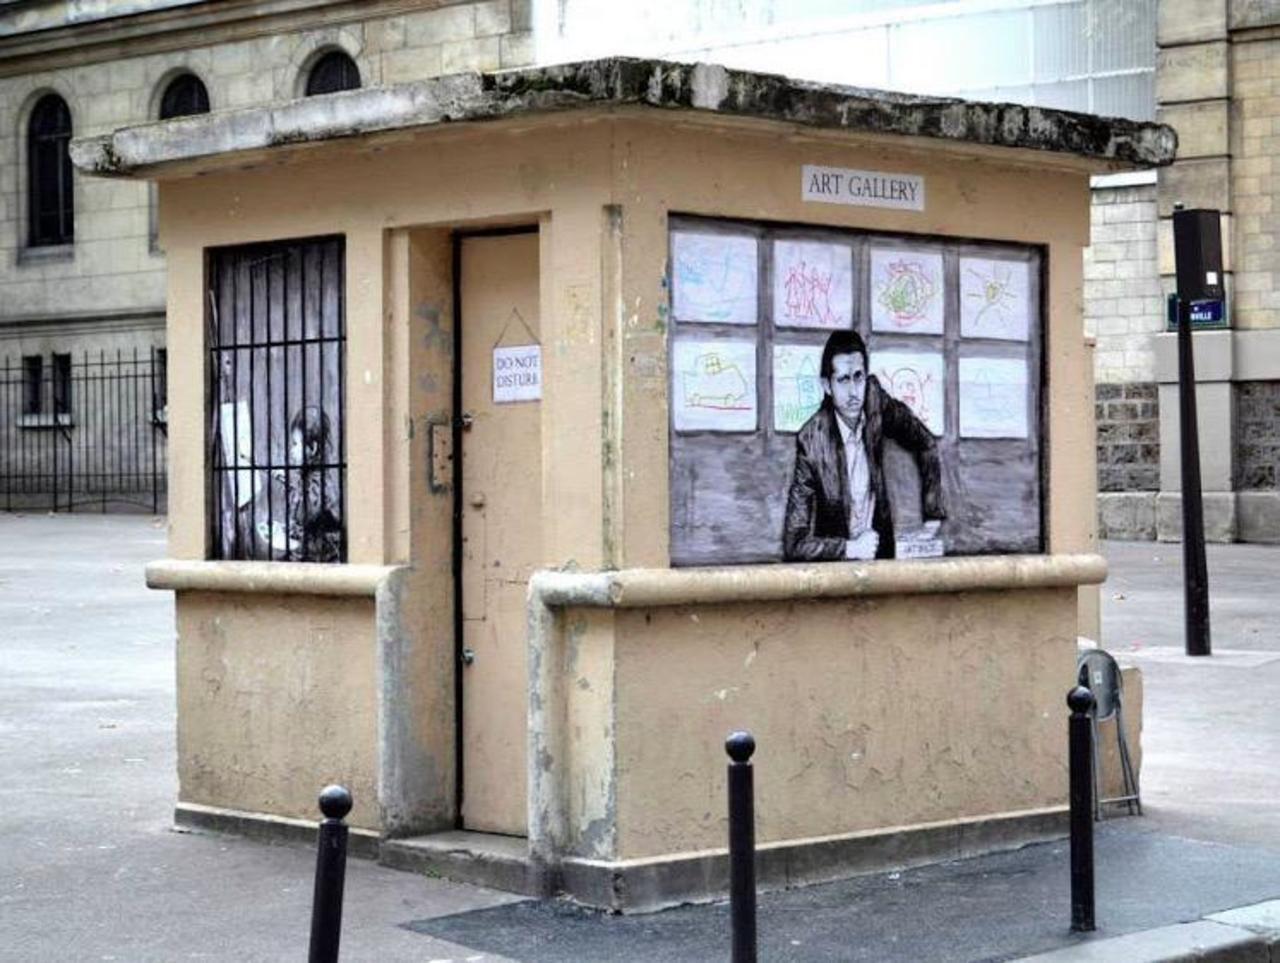 RT @richardbanfa: #streetart by #Levalet in #Paris #switch #graffiti #bedifferent #art #art http://t.co/lgA0UeBzau